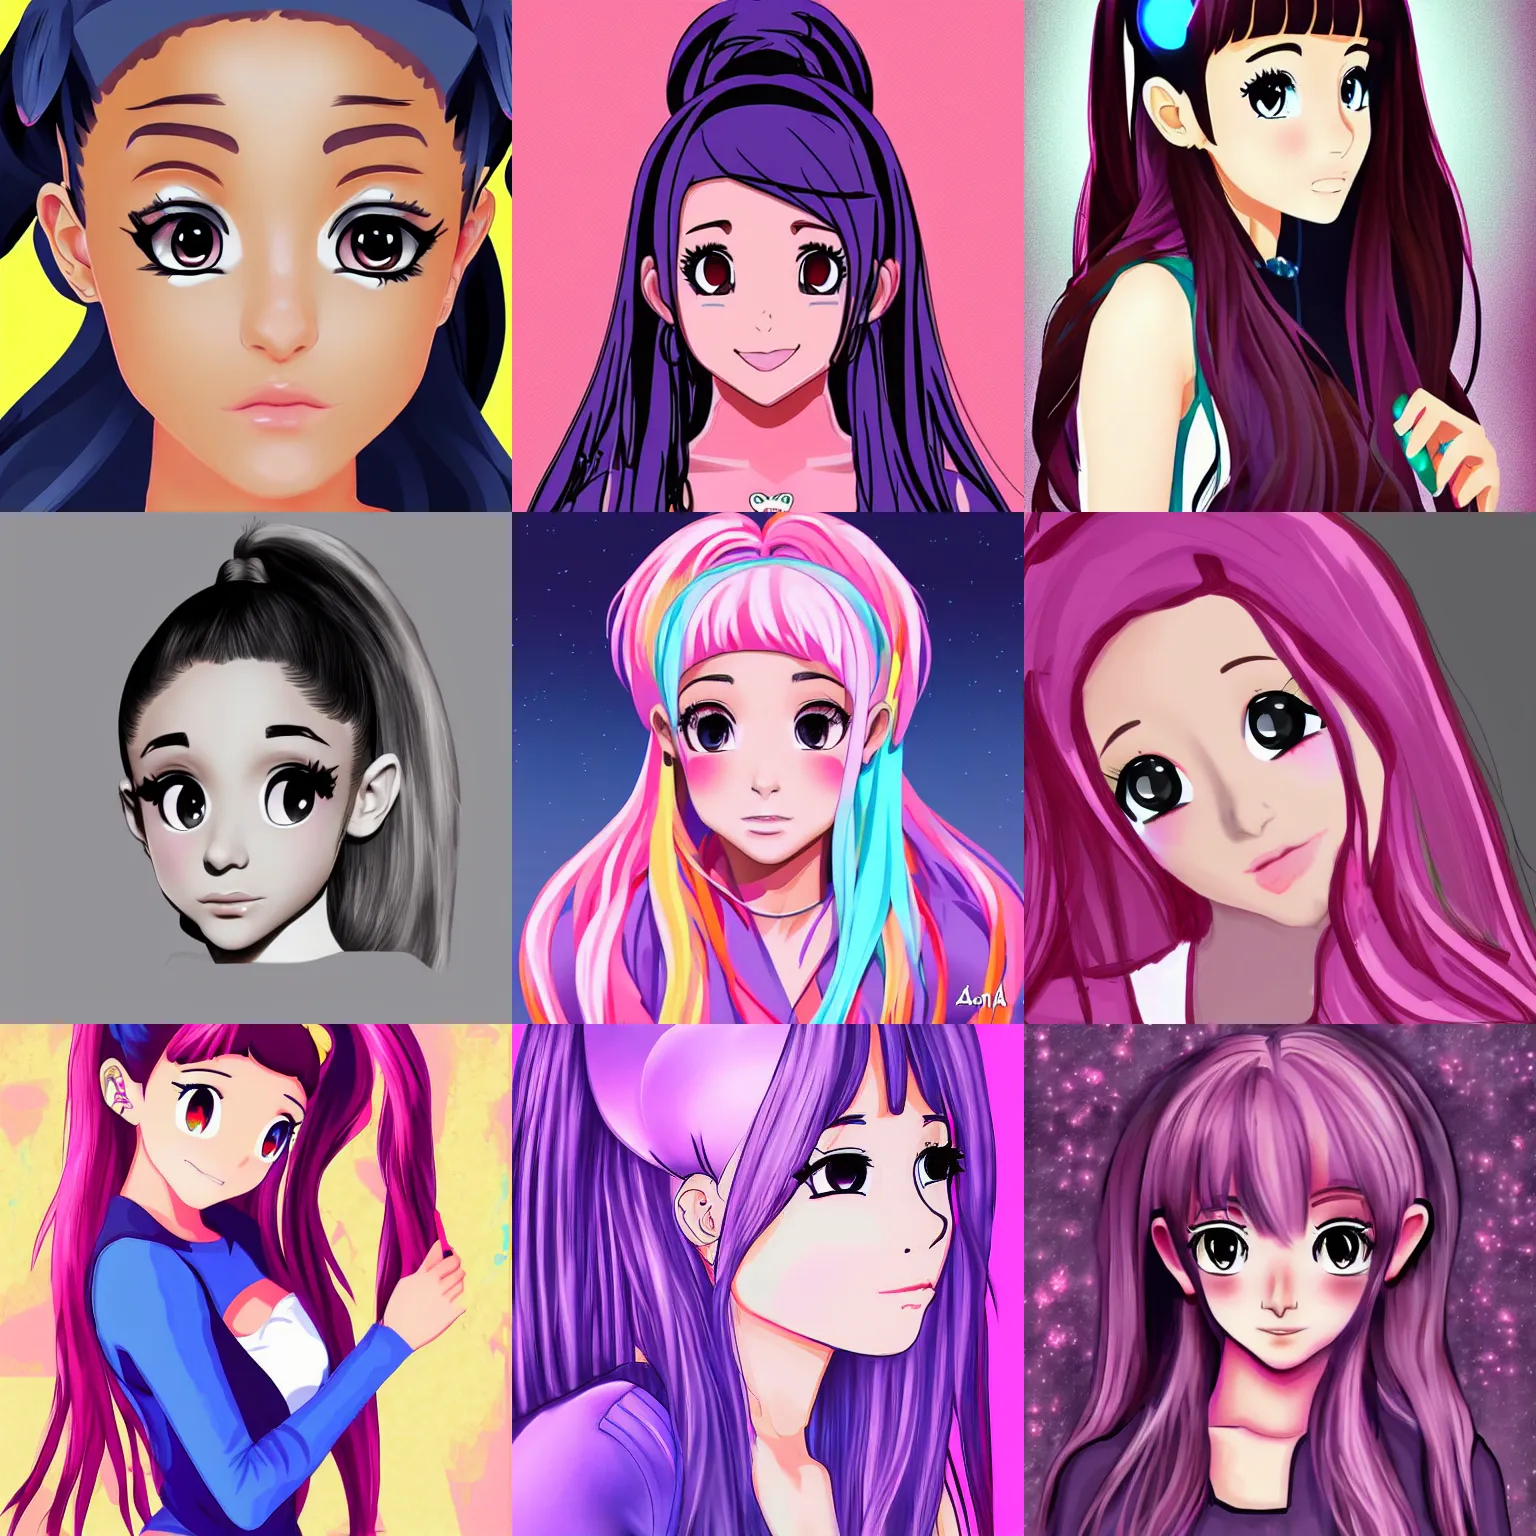 Prompt: Ariana Grande as anime girl, digital art